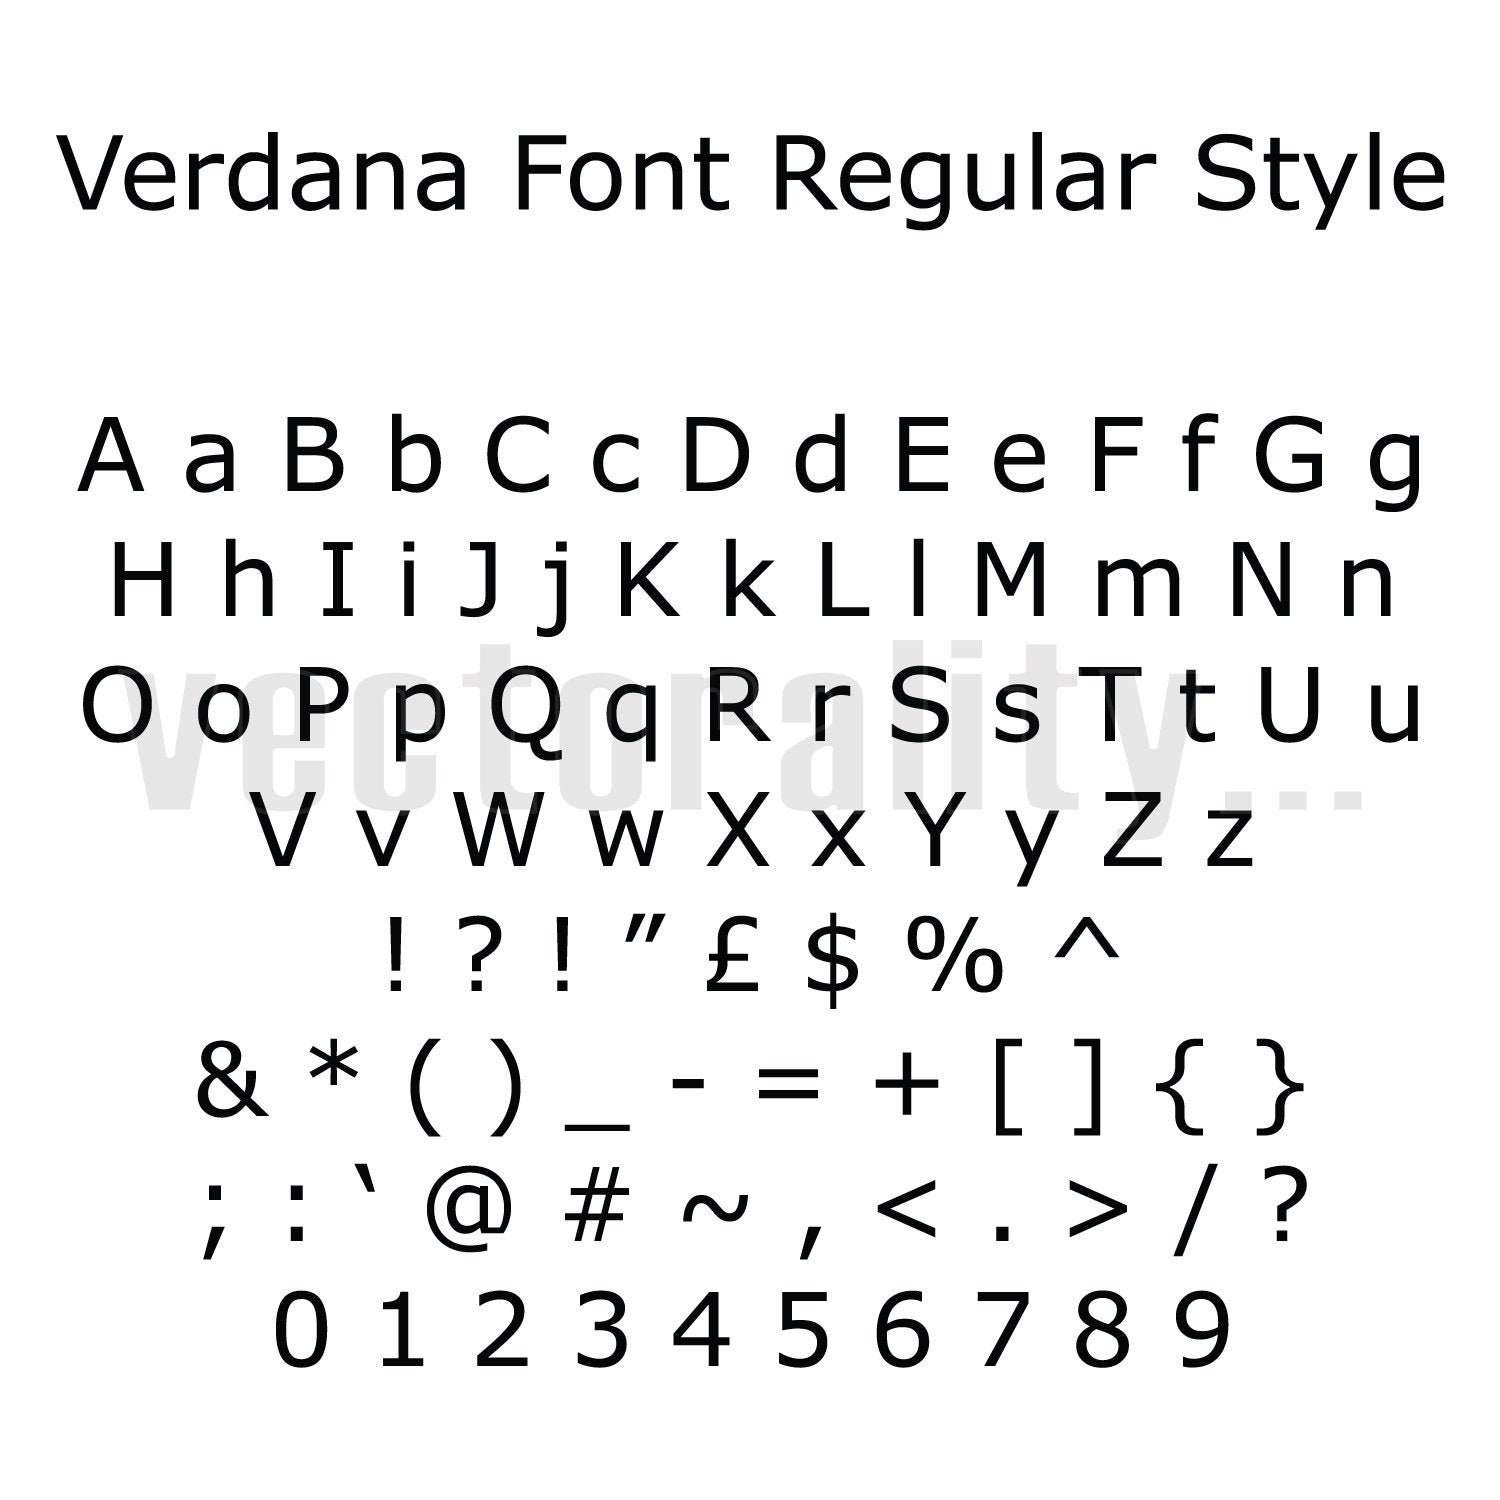 Verdana Font Regular Style Alphabet Numbers Letters Vector Art - Etsy  Singapore